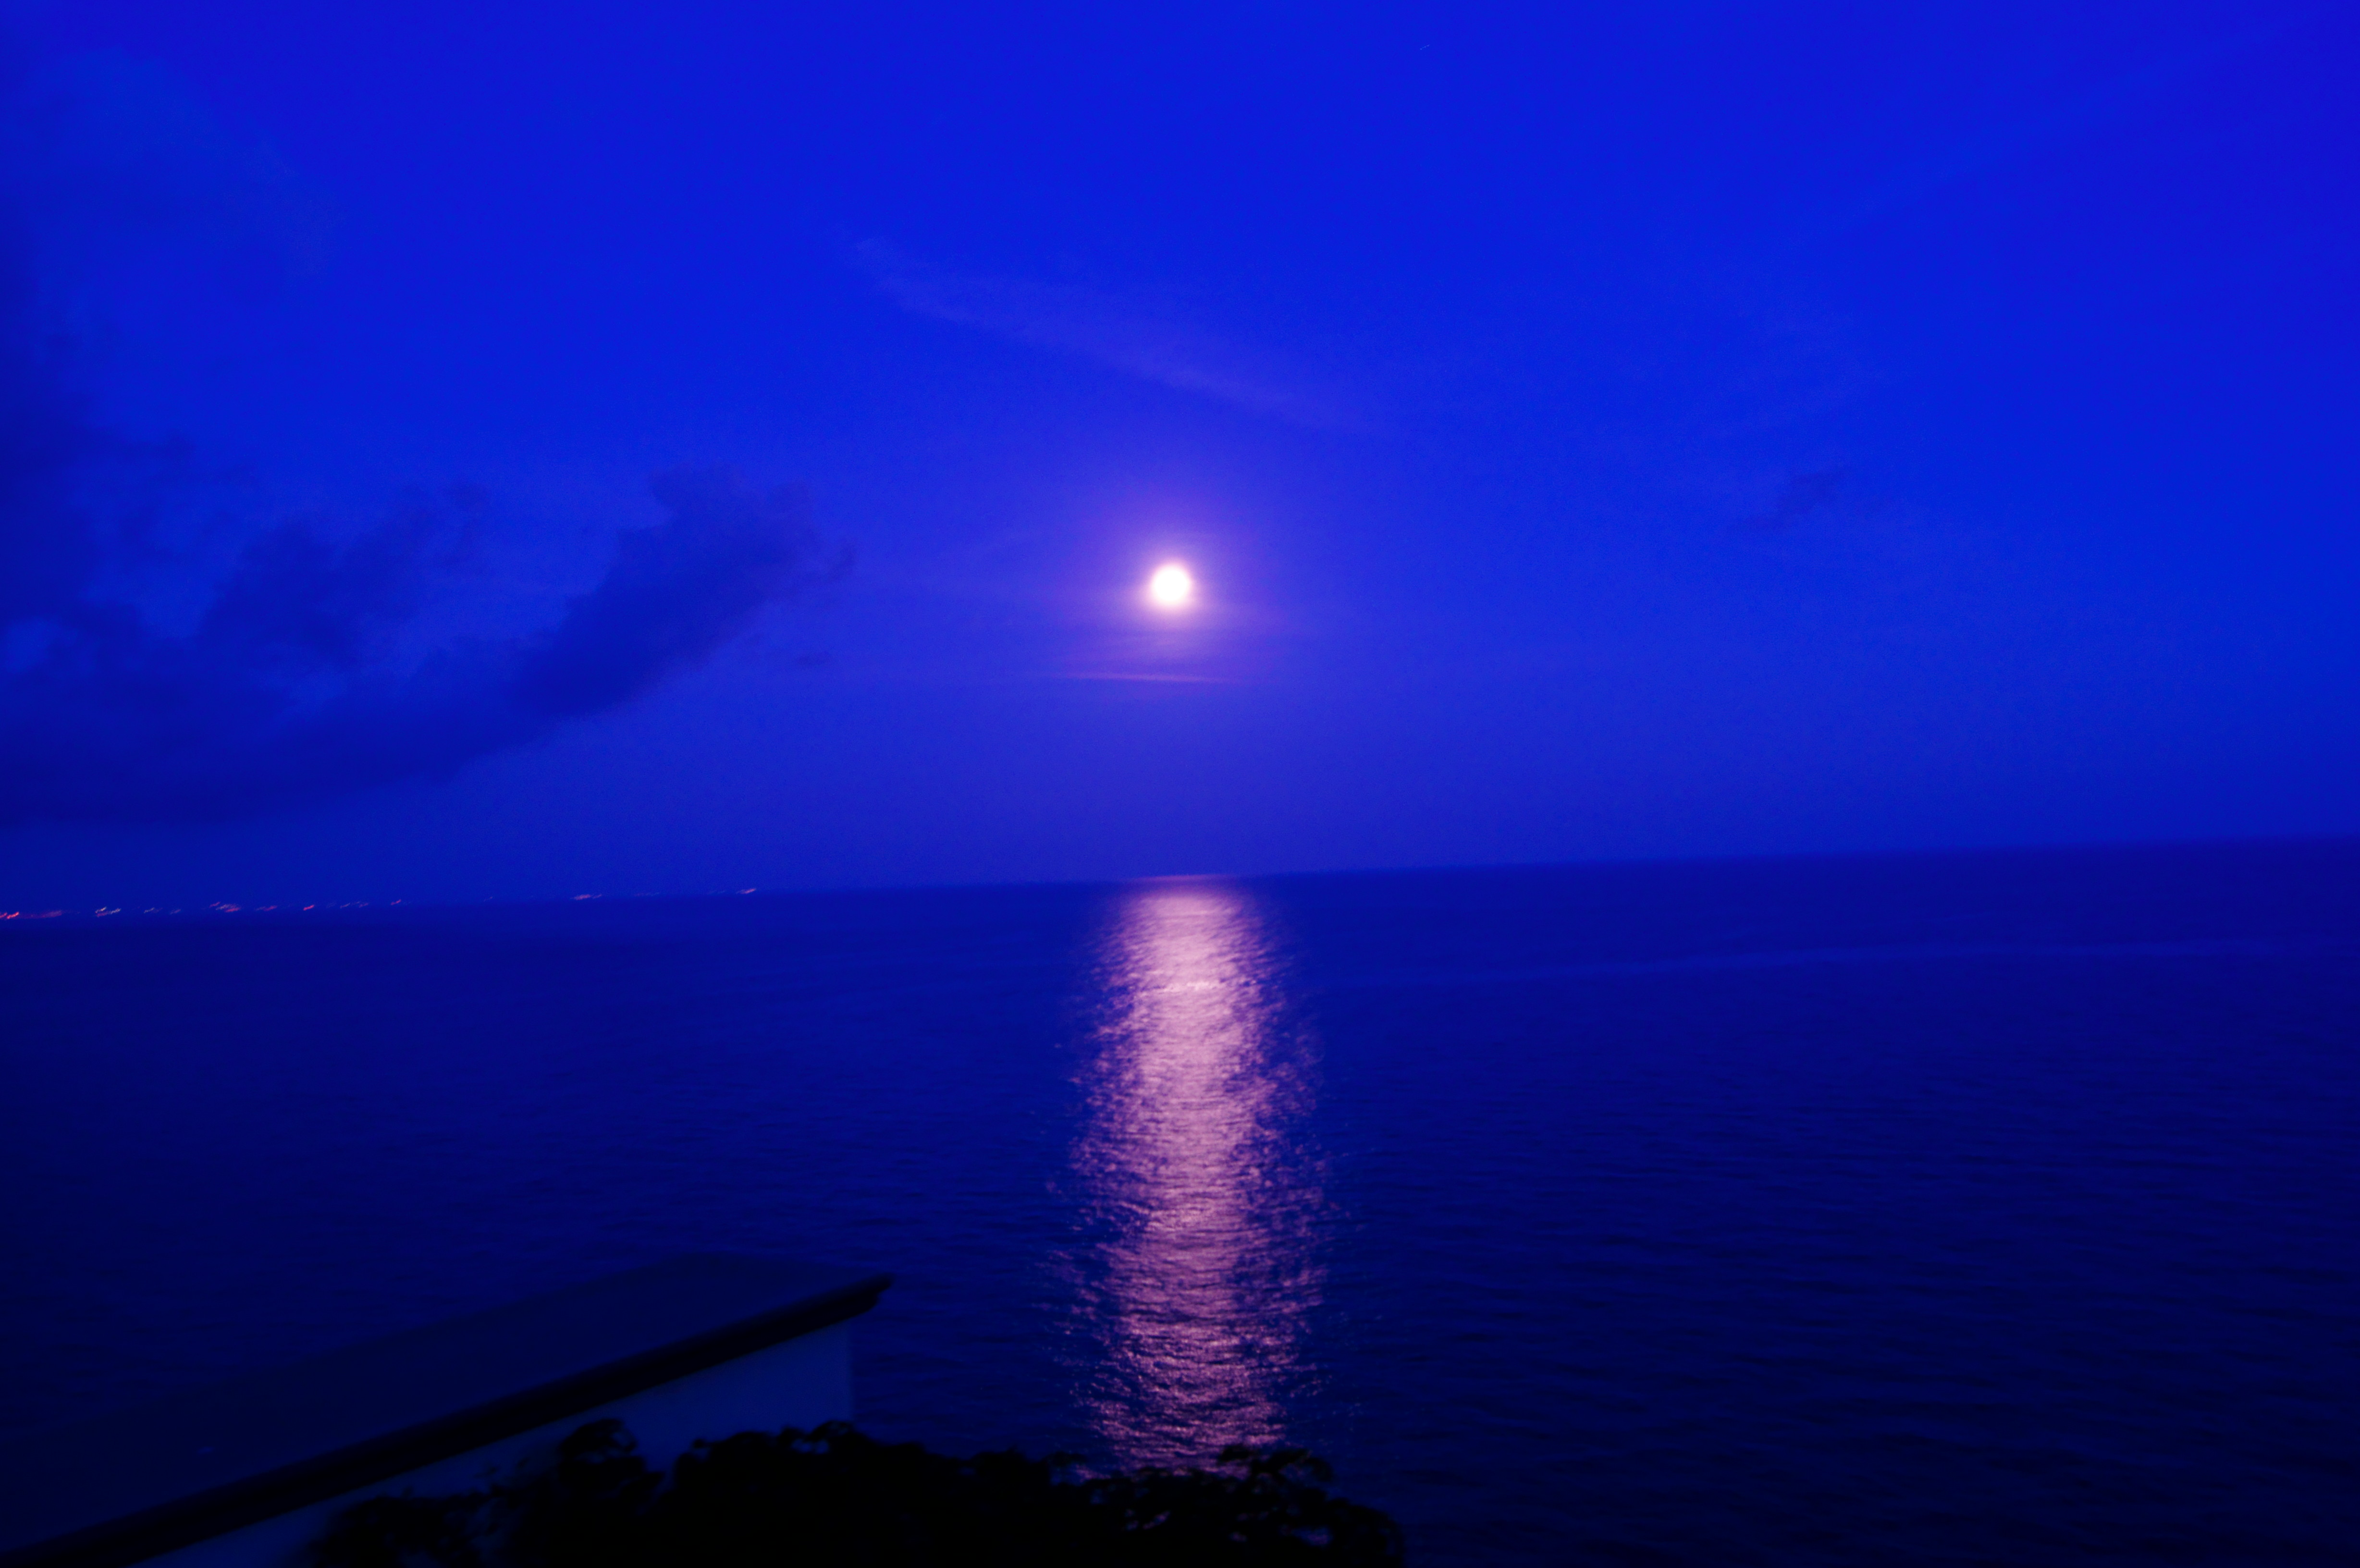 Super Moon3 off Amalfi coast Italy